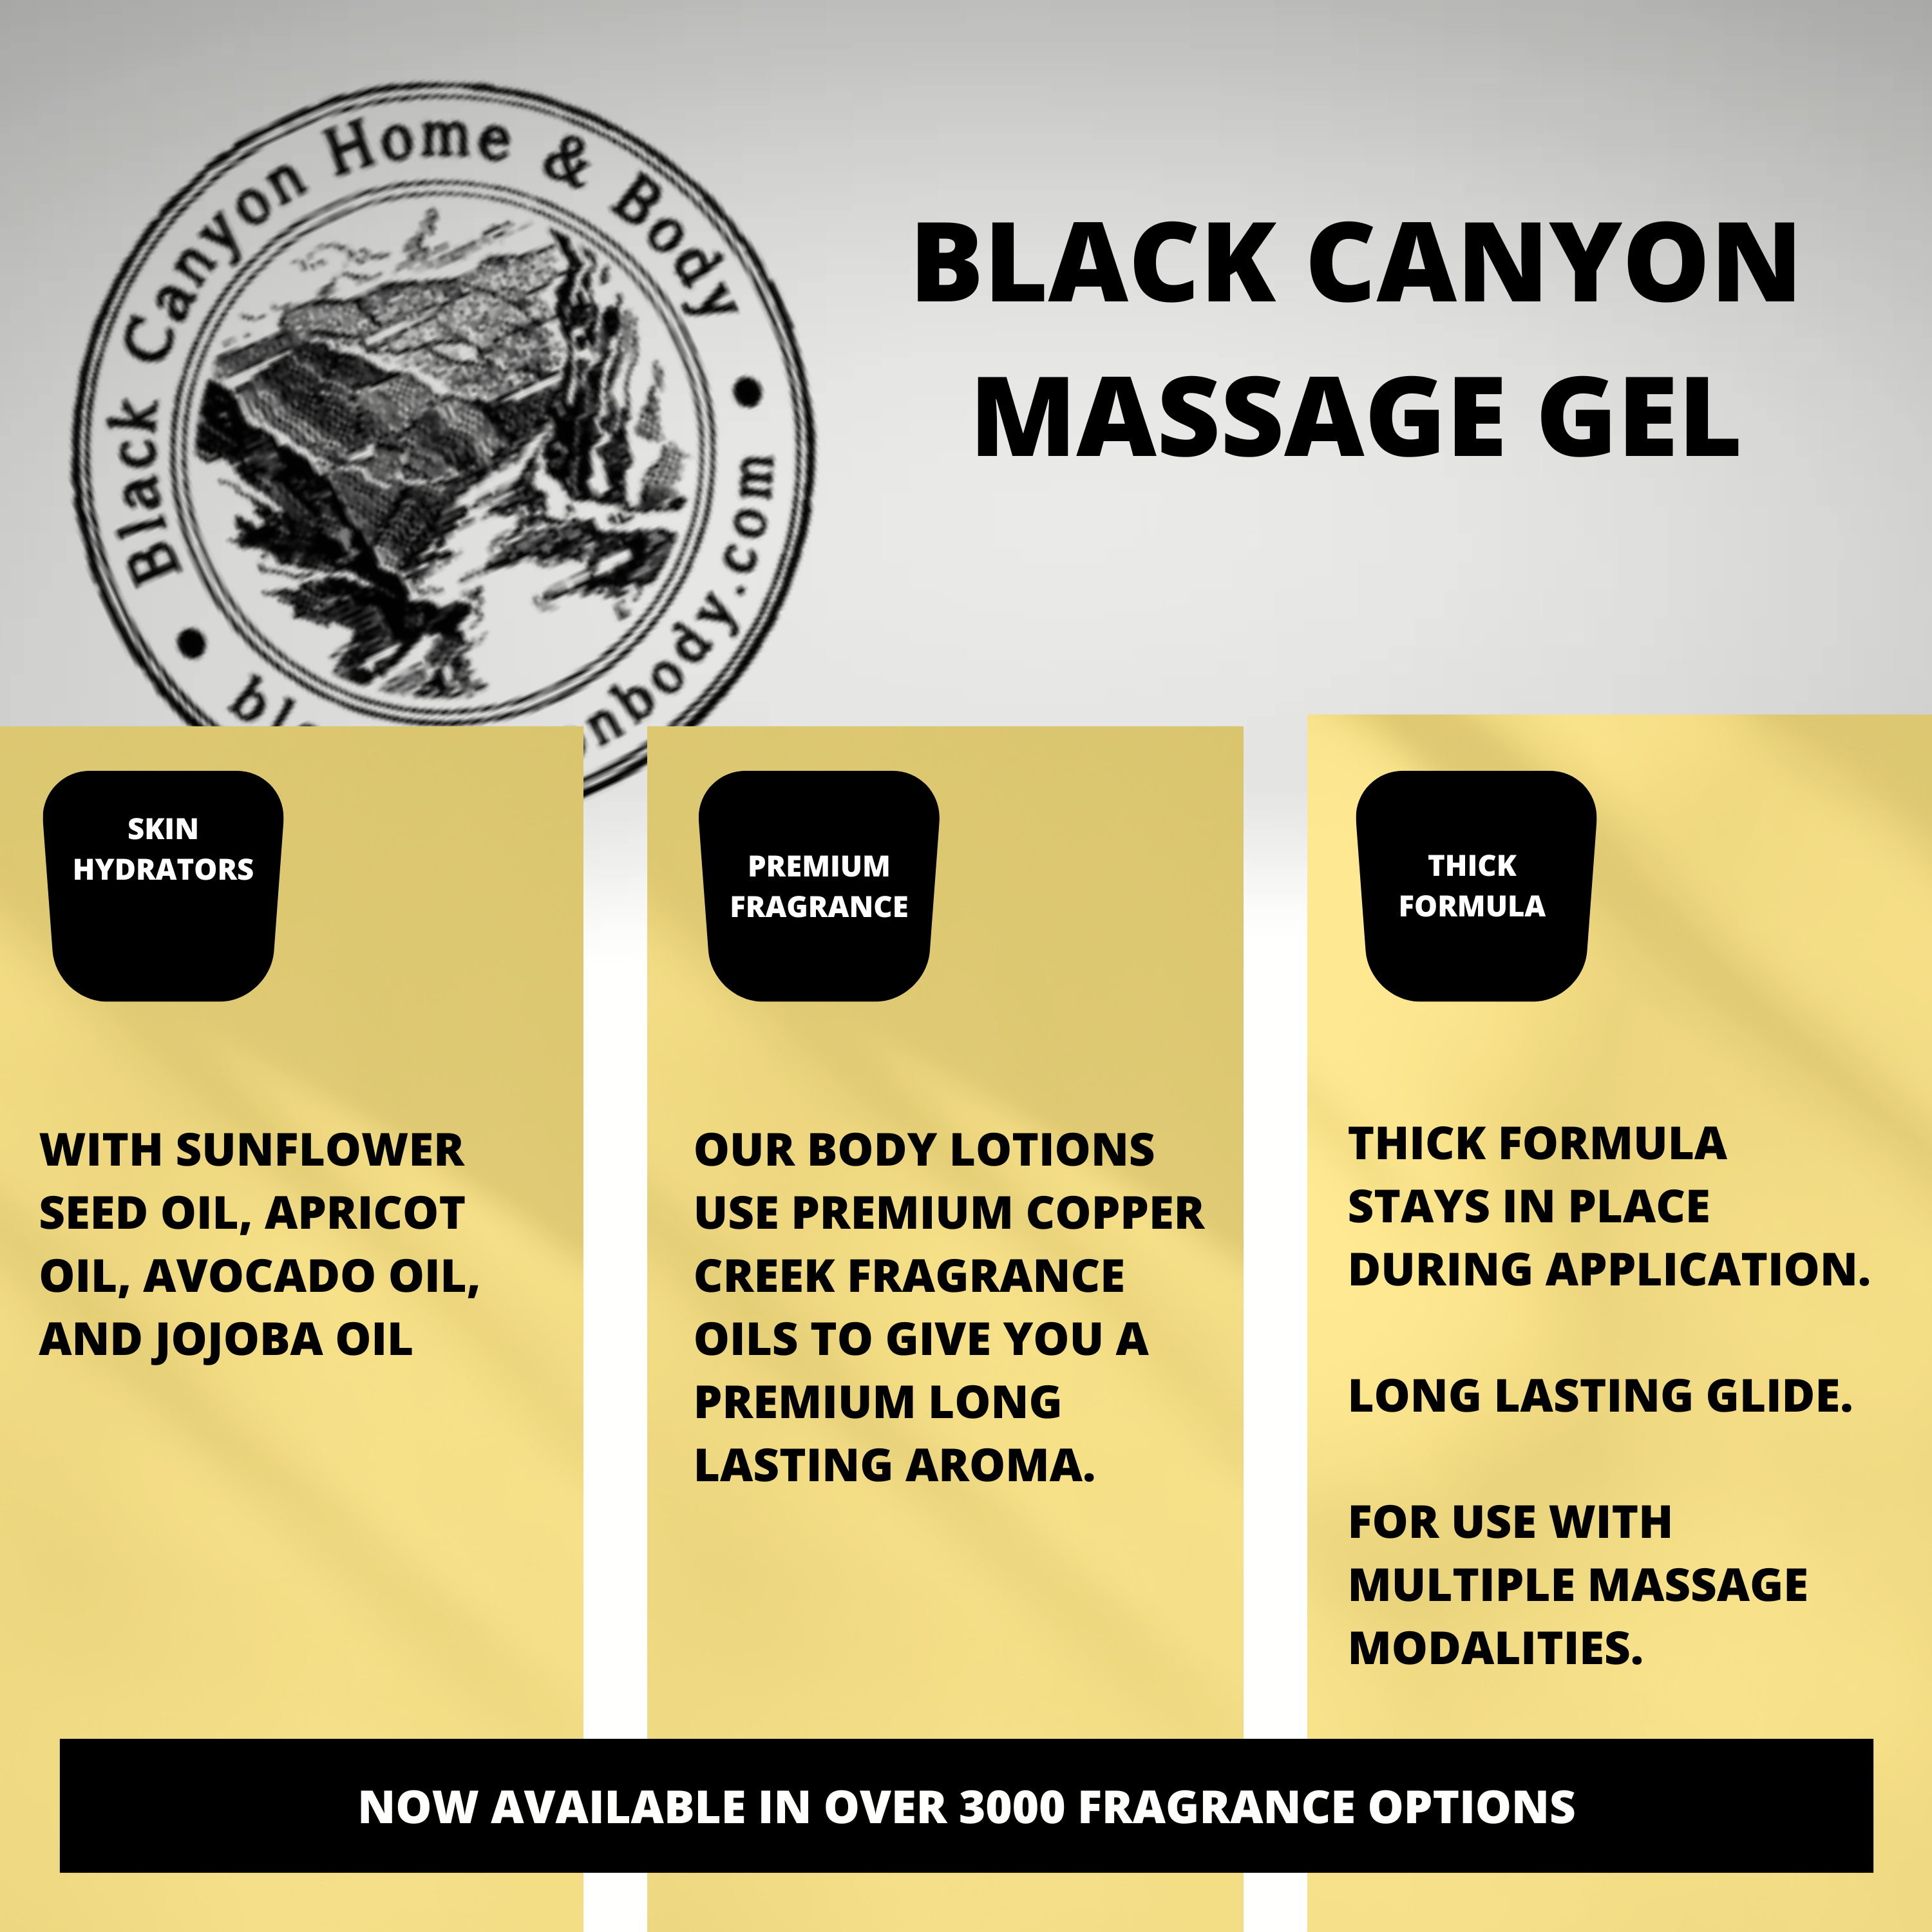 Black Canyon Cactus & Cucumber Scented Massage Gel